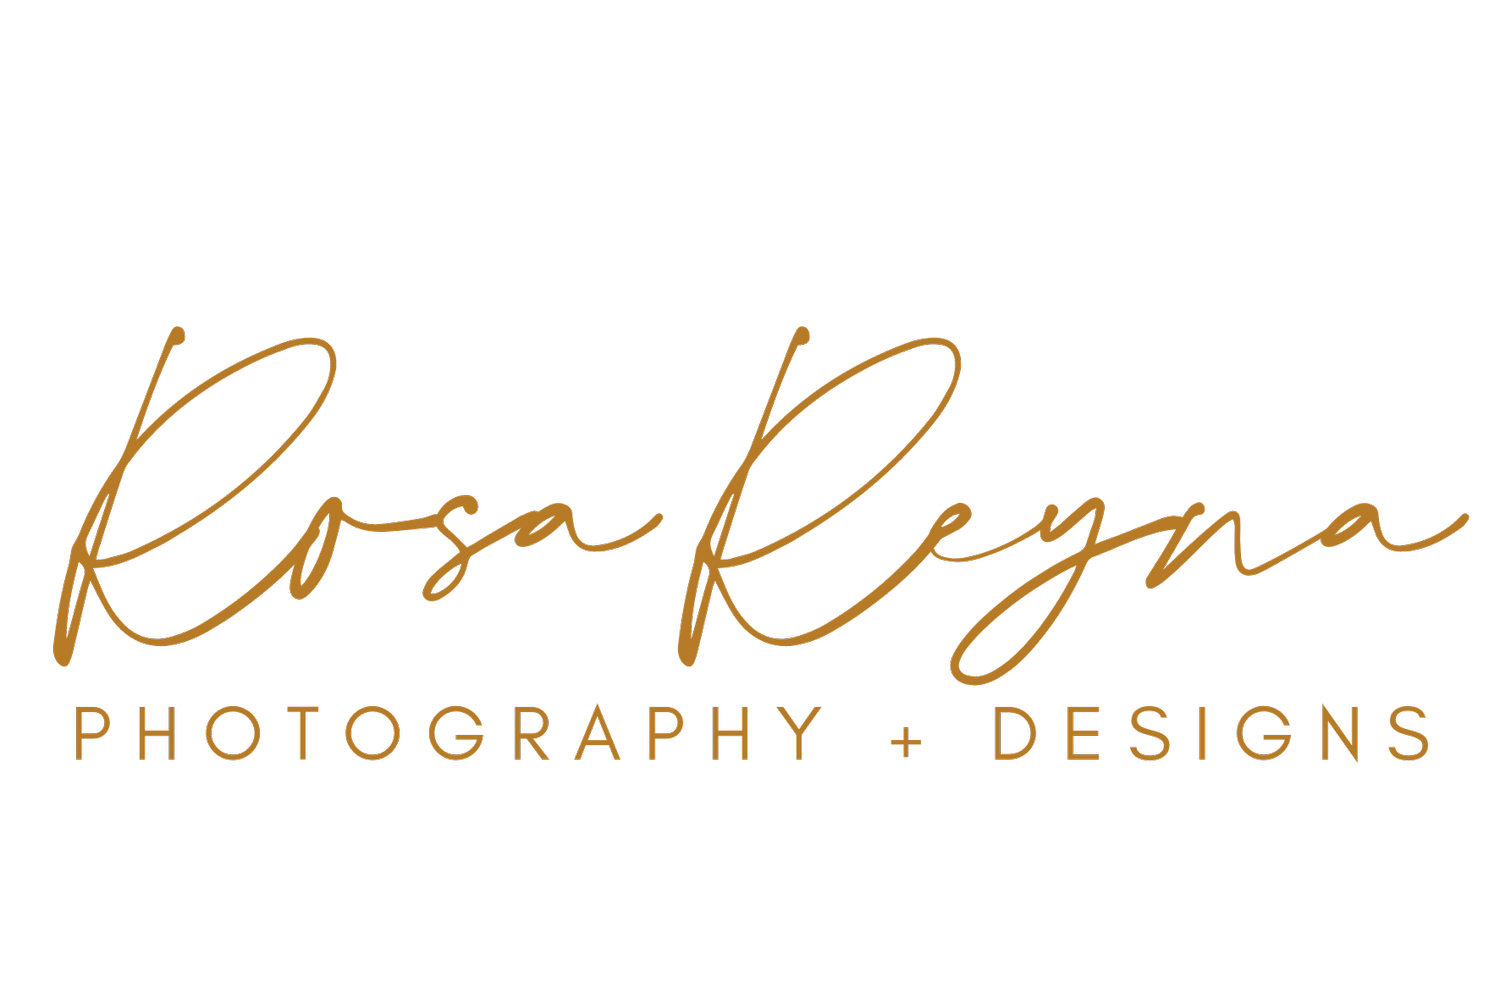 Rosa Reyna Photography + Design